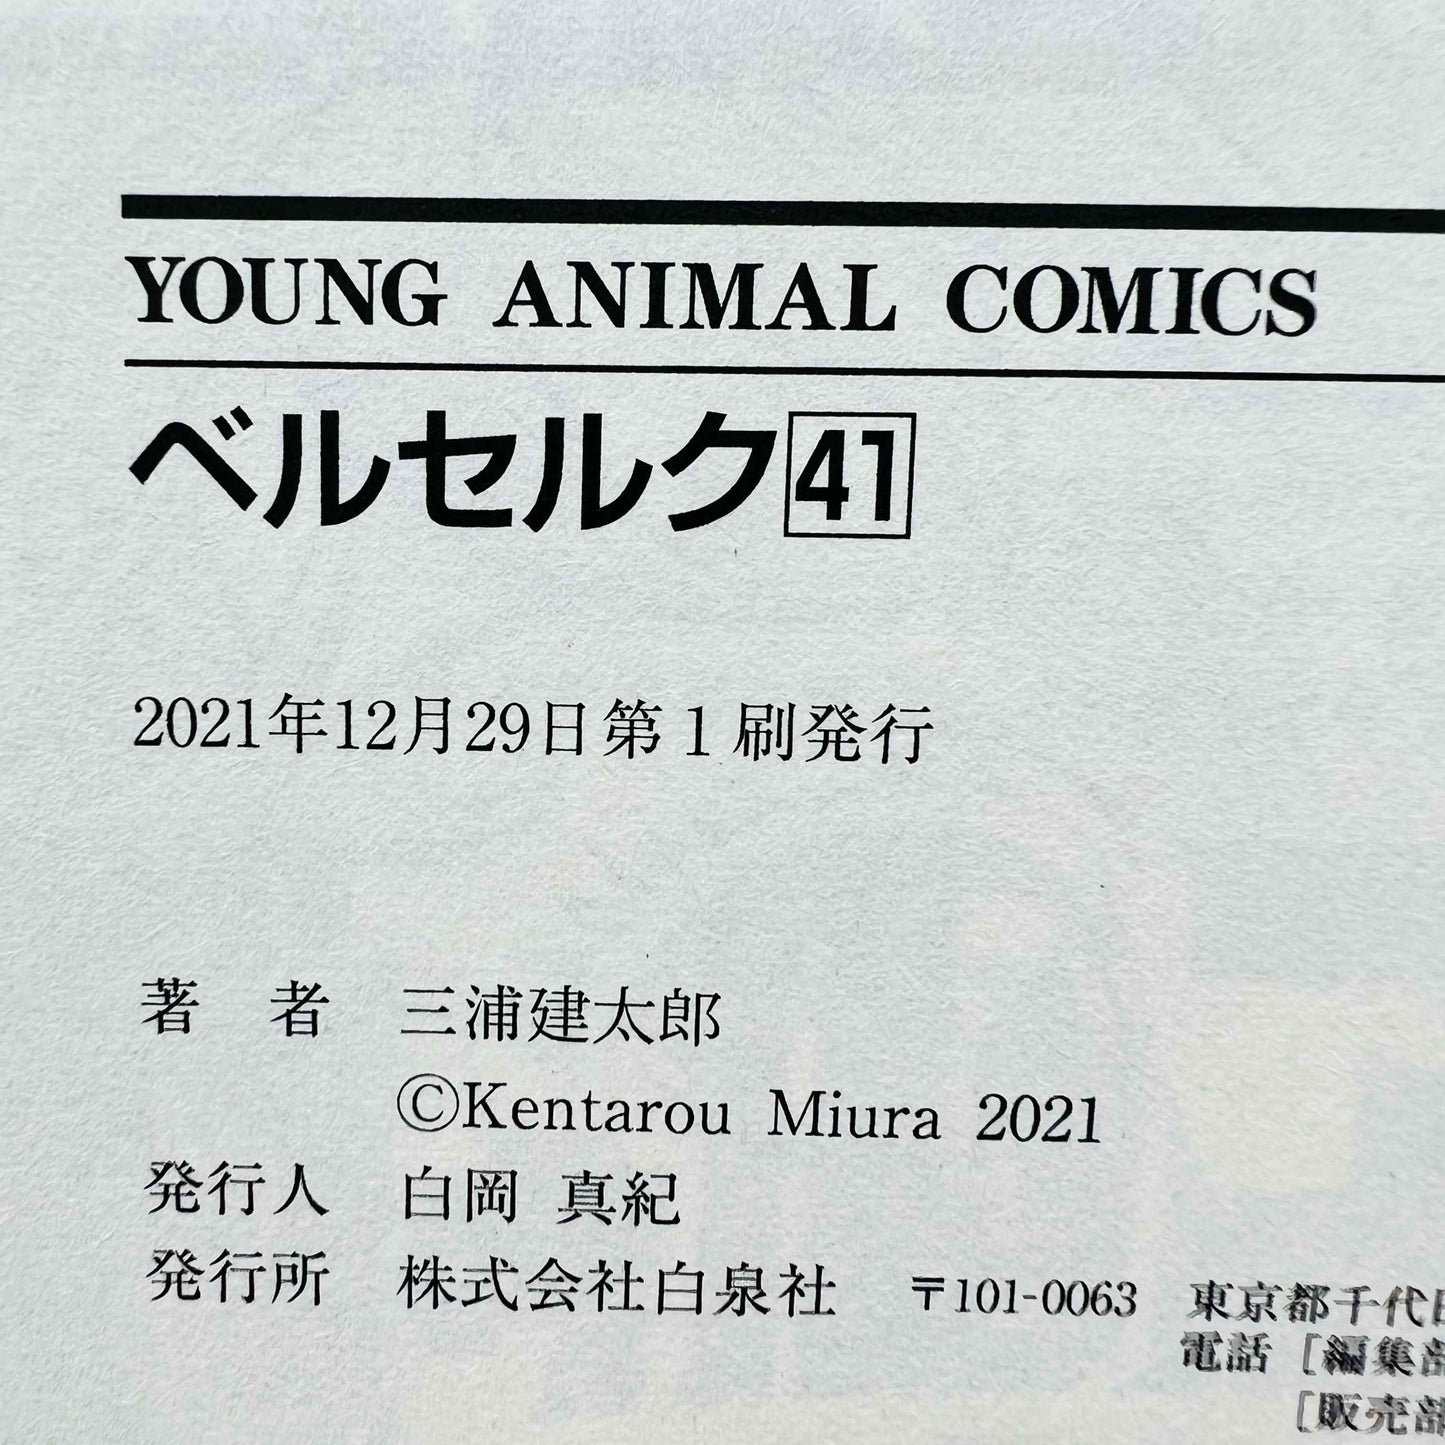 Berserk - Volume 41 /w Obi - 1stPrint.net - 1st First Print Edition Manga Store - M-BRSK-41-004